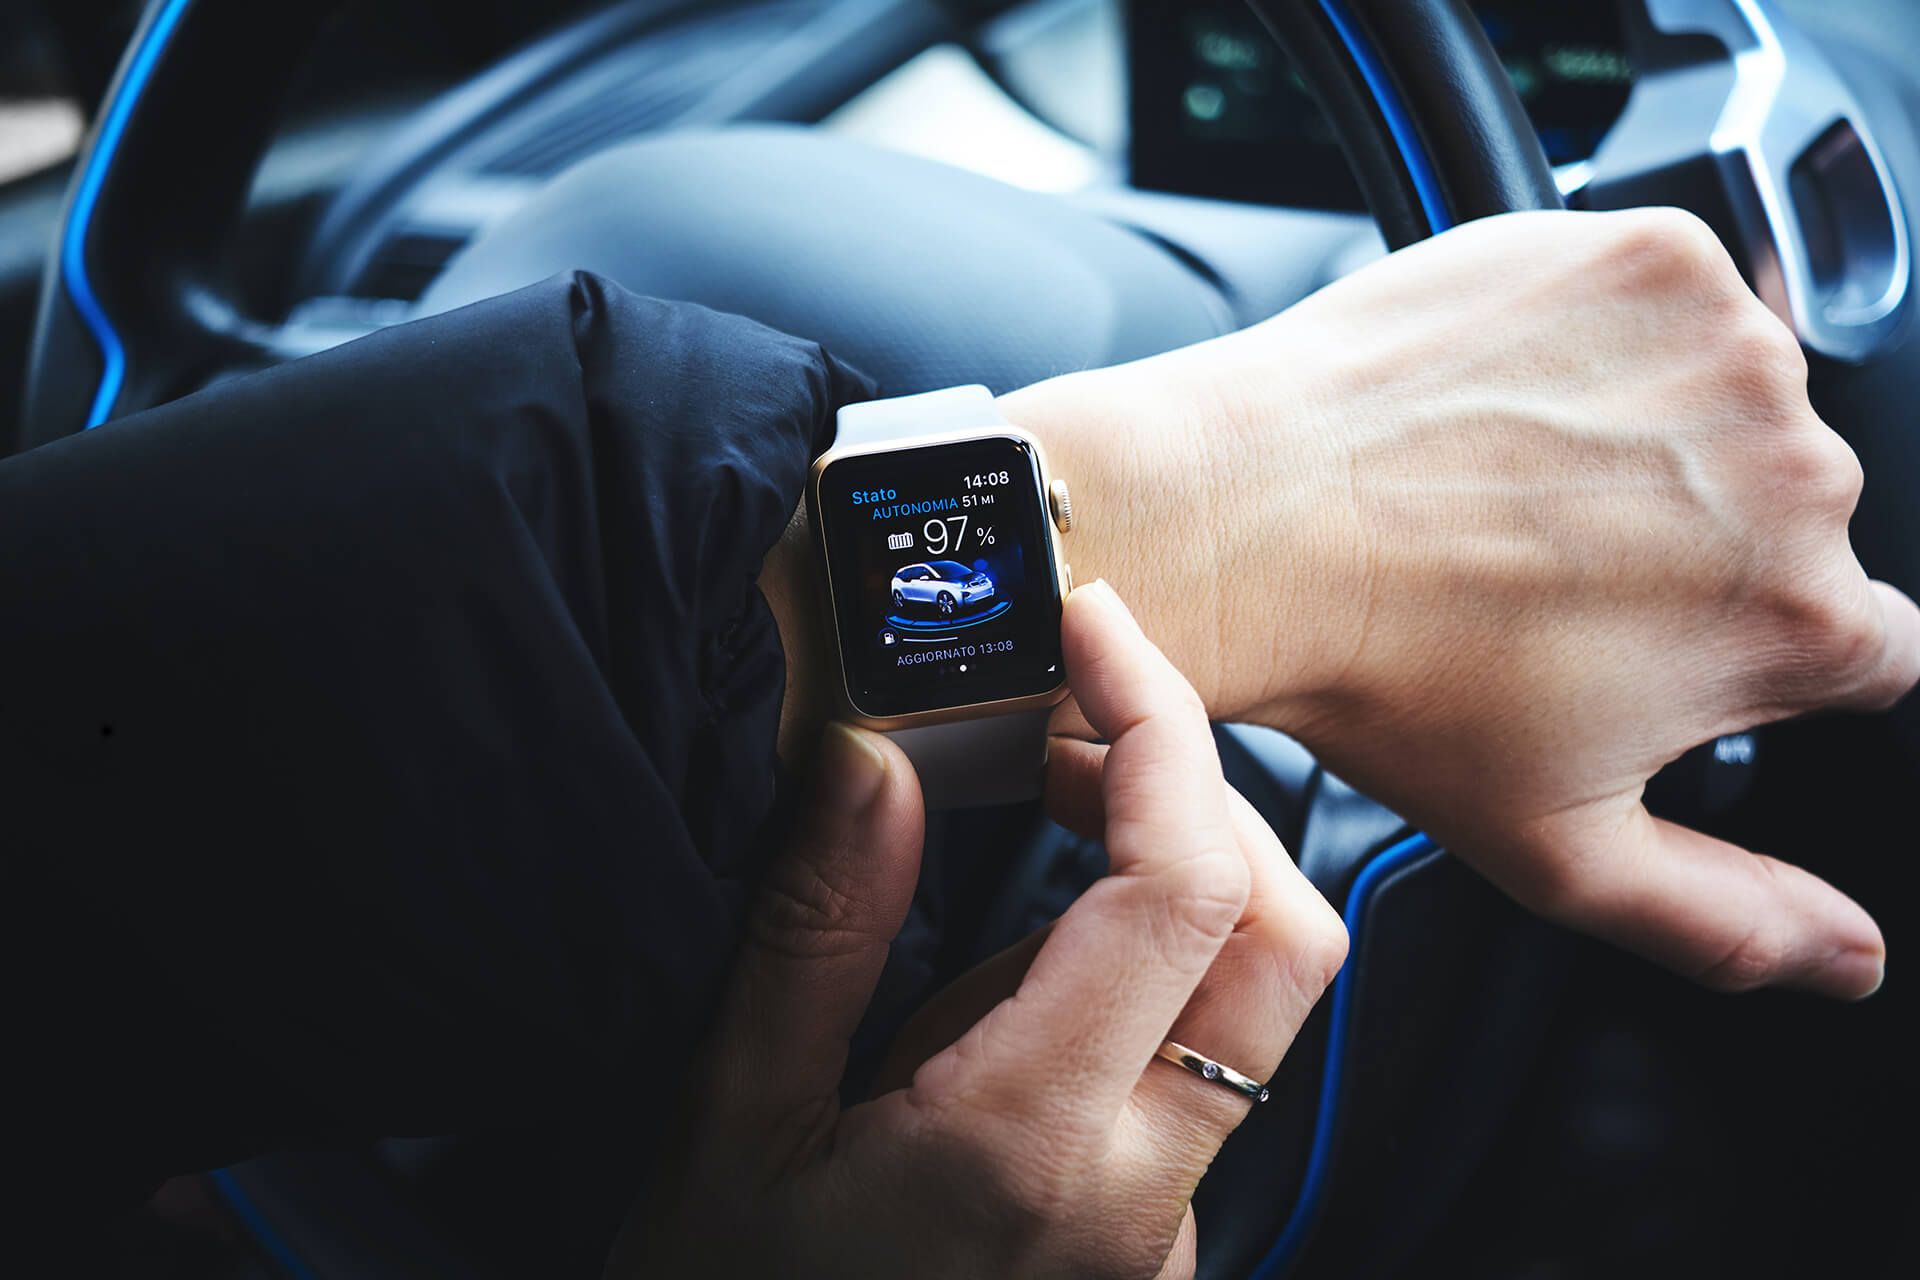 A person controls a smart car via their smart watch app